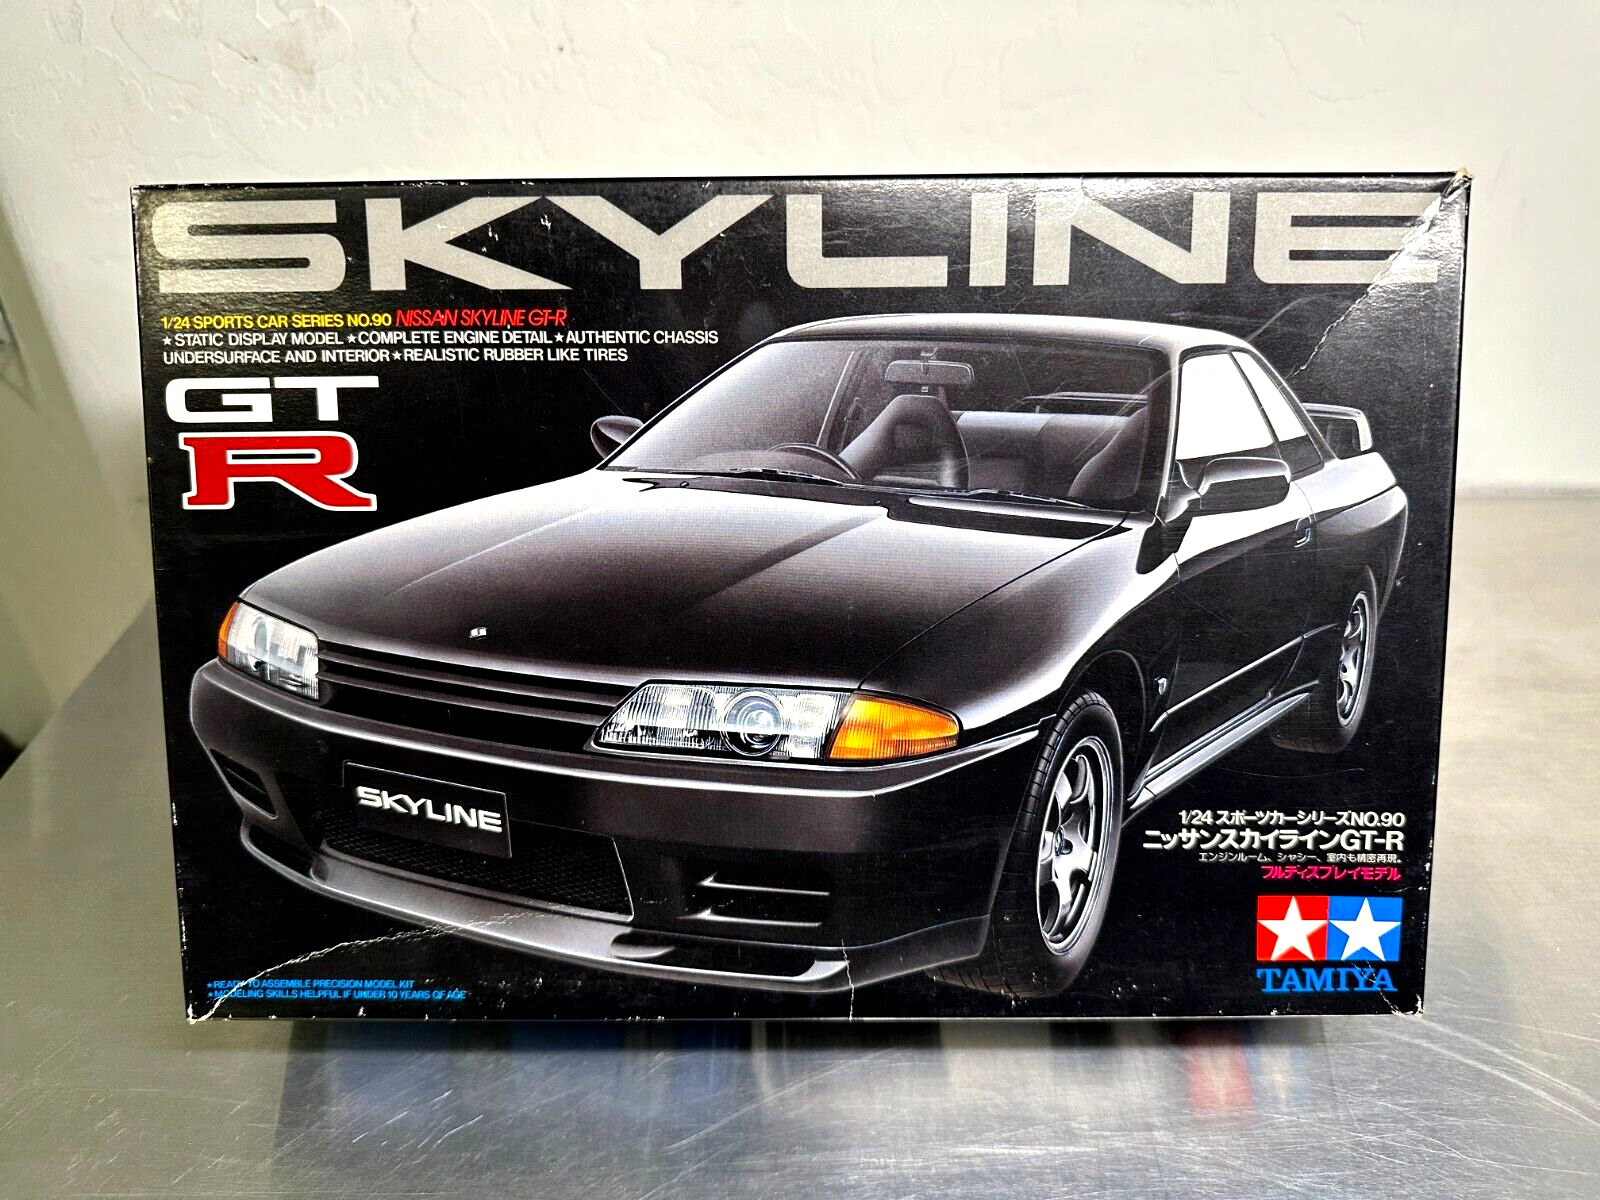 Tamiya Nissan Skyline GT-R R32 1/24 Model Kit #24090 **Box & Instructions Only**